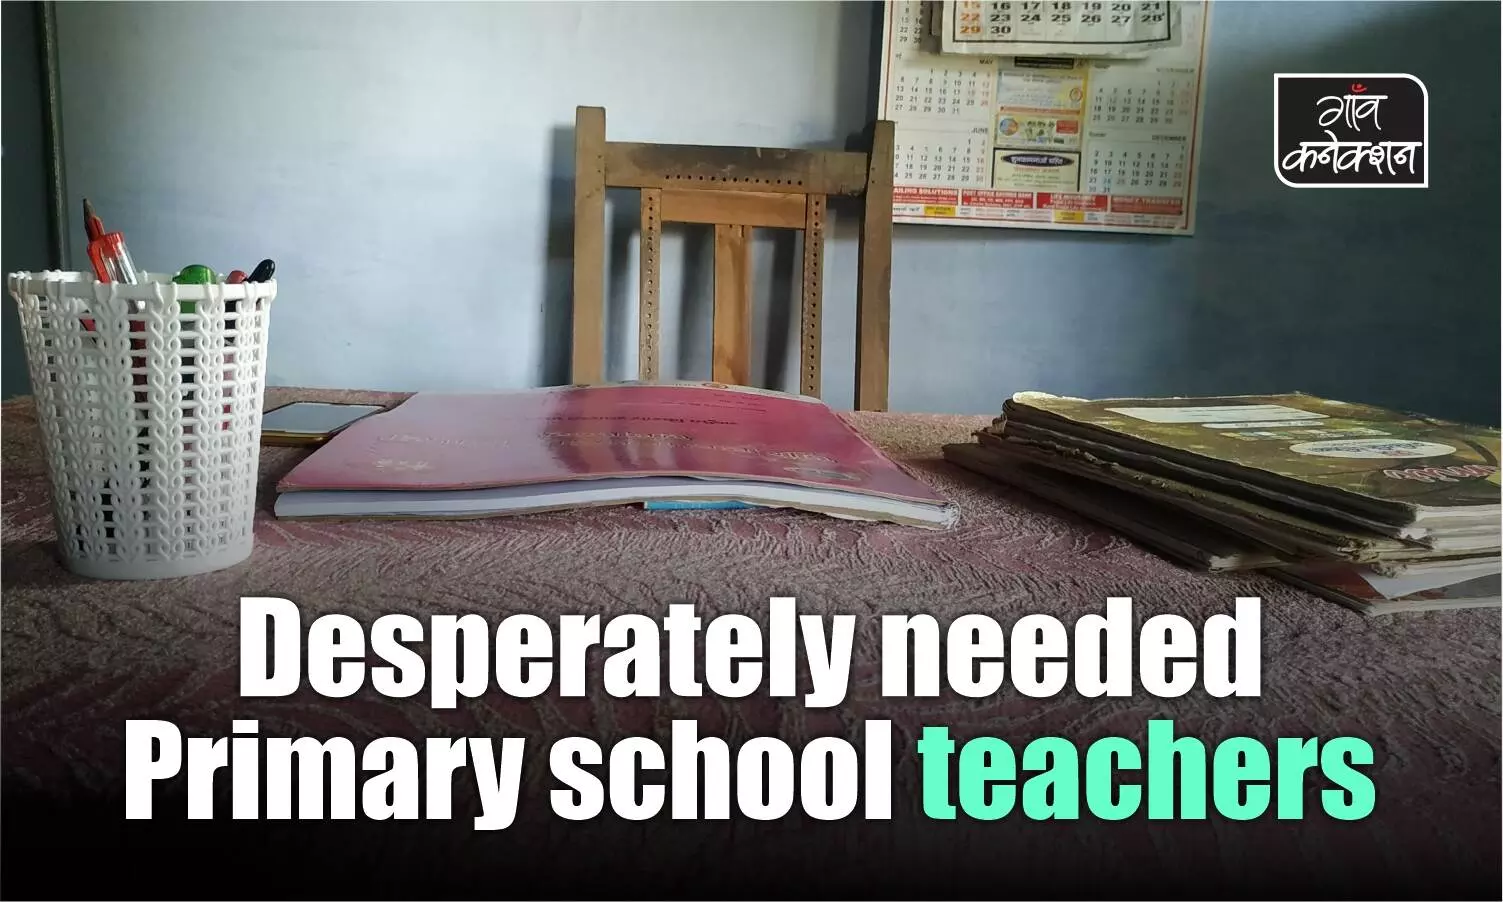 We are somehow managing, say primary school teachers in Uttar Pradesh